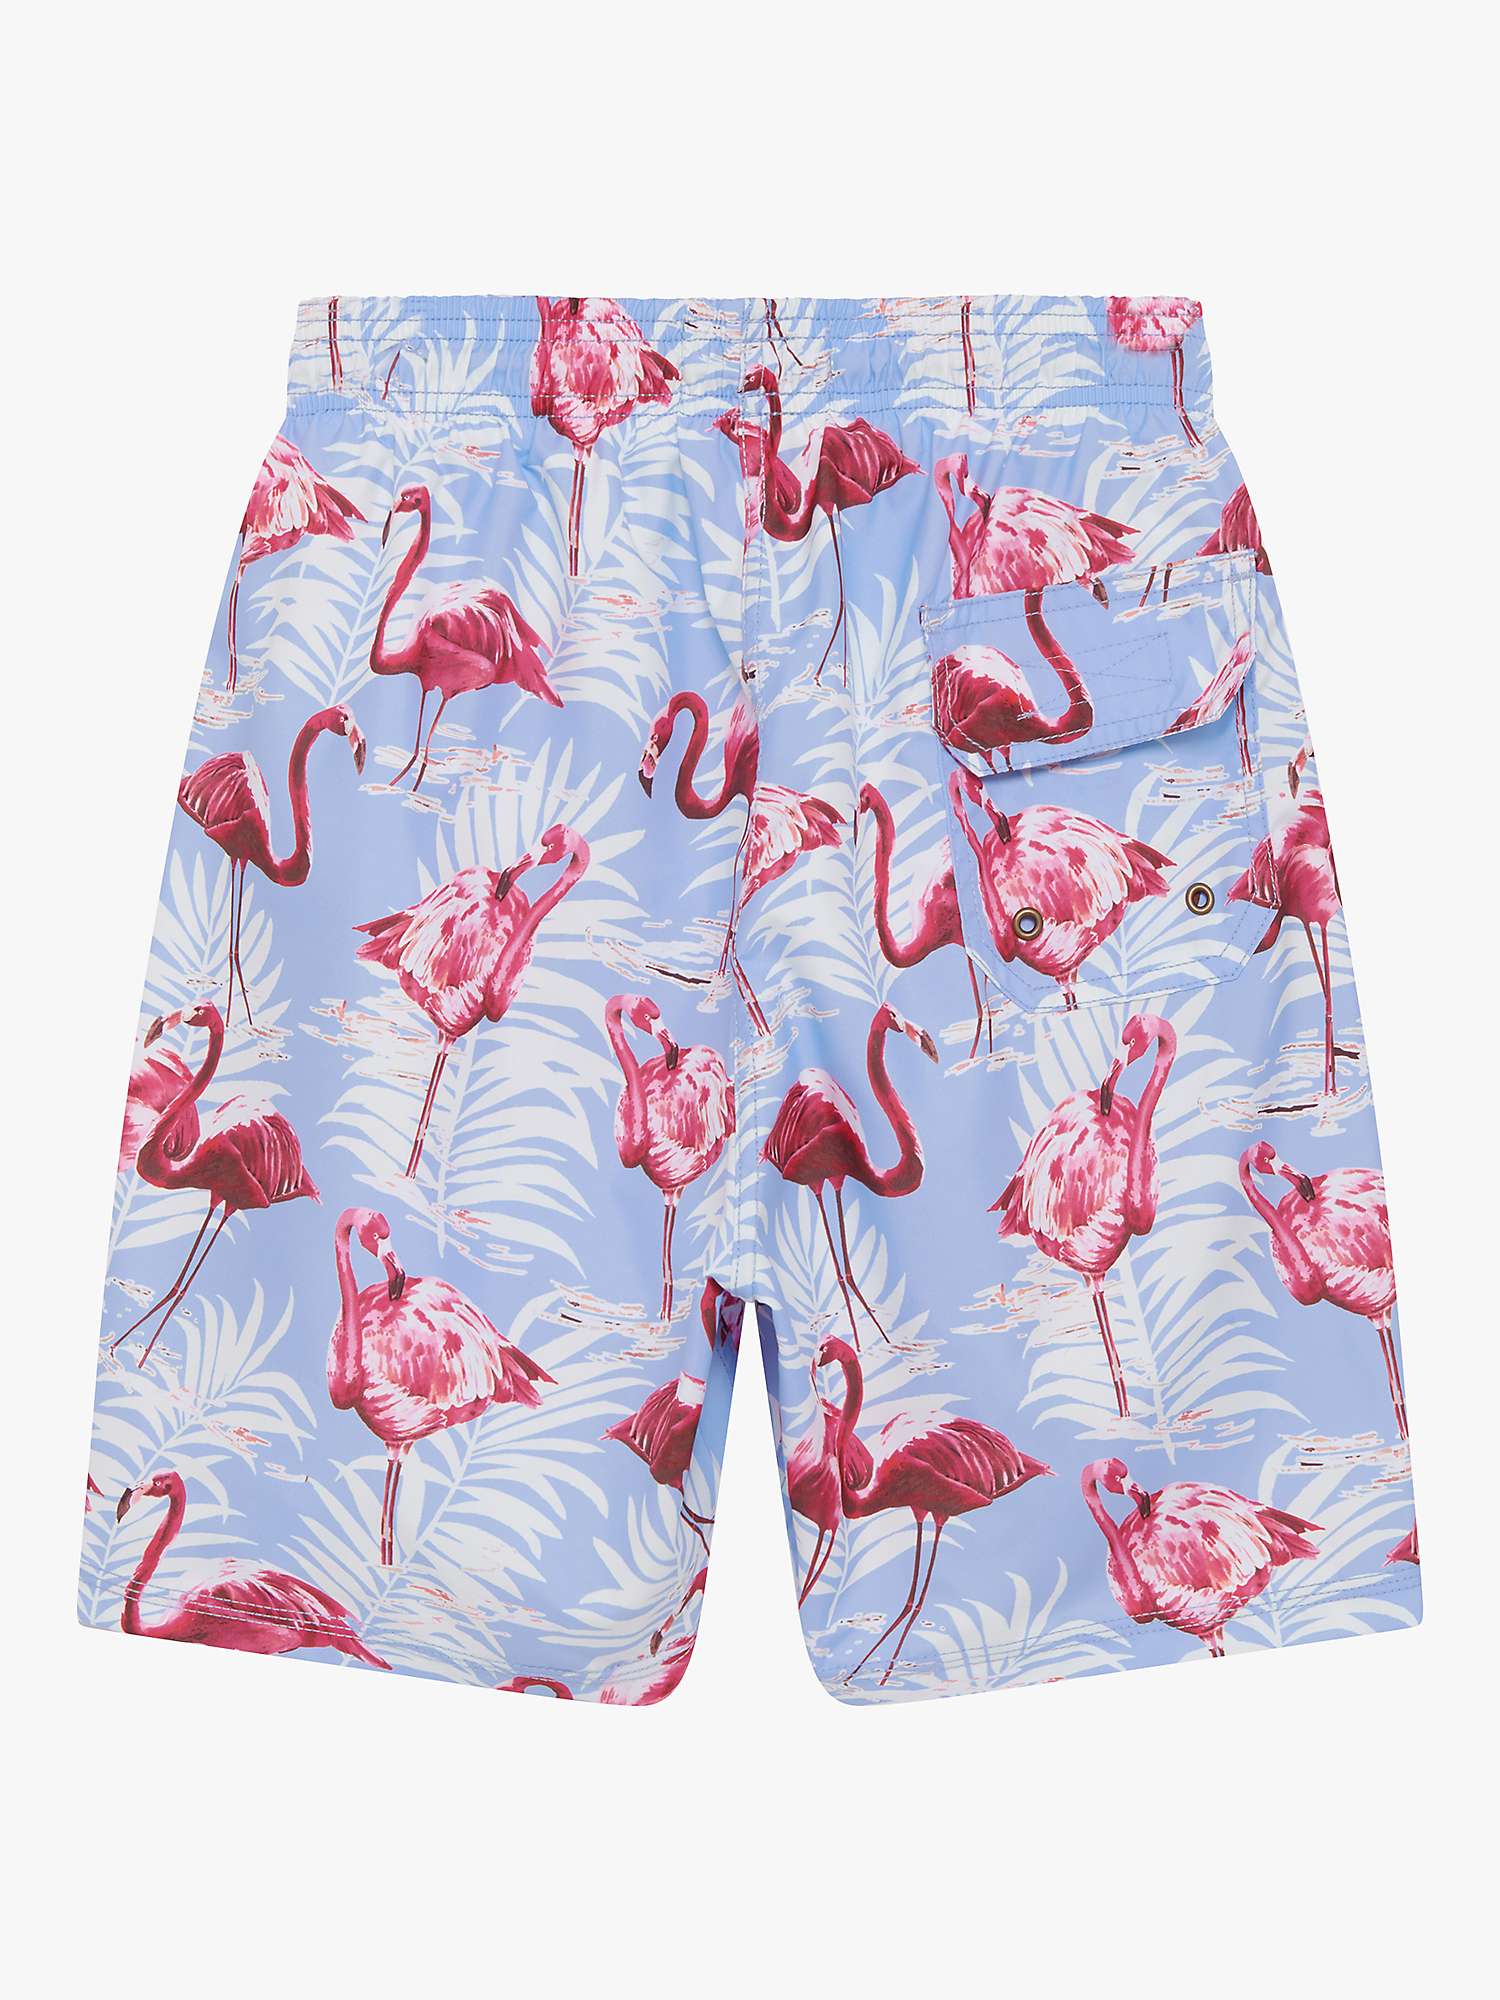 Buy Trotters Flamingo Swim Shorts, Blue/Flamingo Online at johnlewis.com